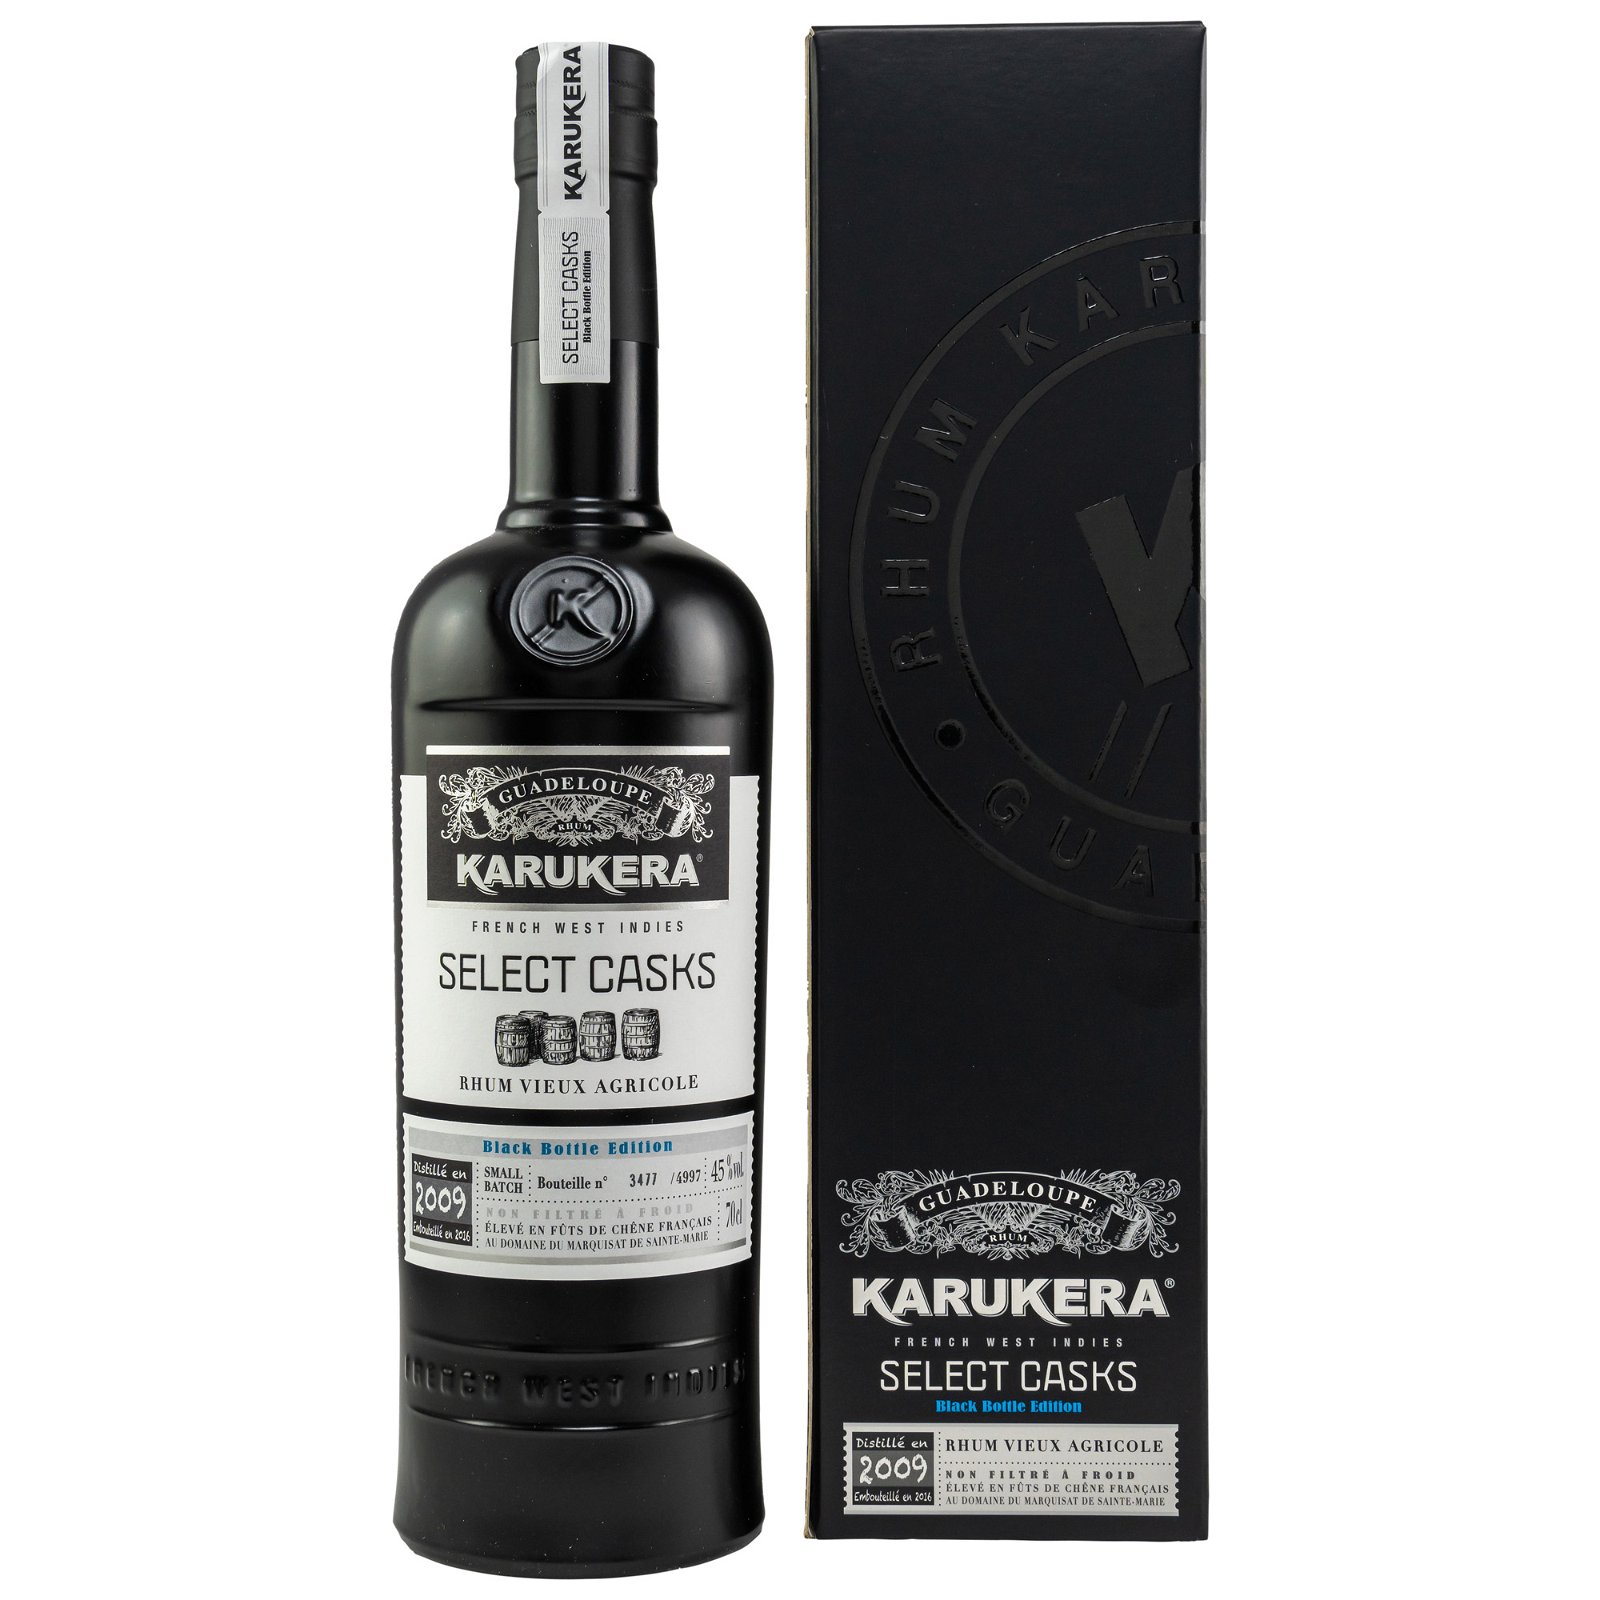 Karukera 2009/2016 Select Casks Black Bottle Edition Rhum Vieux Agricole